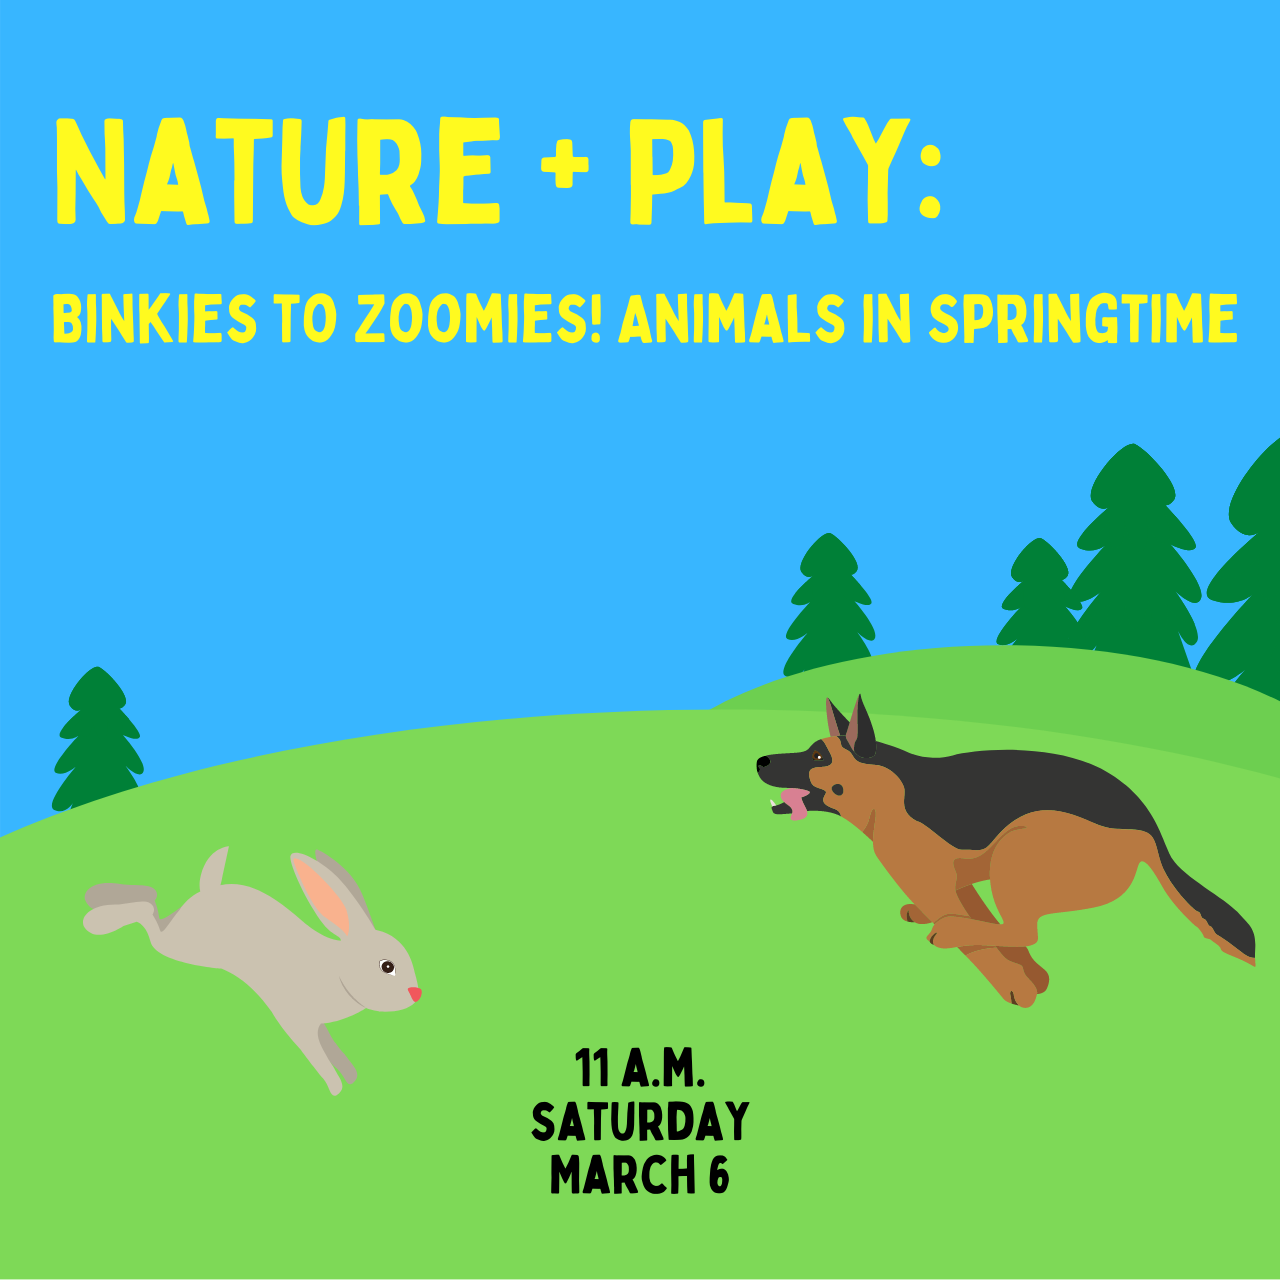 Nature + Play: Binkies to Zoomies! Animals in Springtime